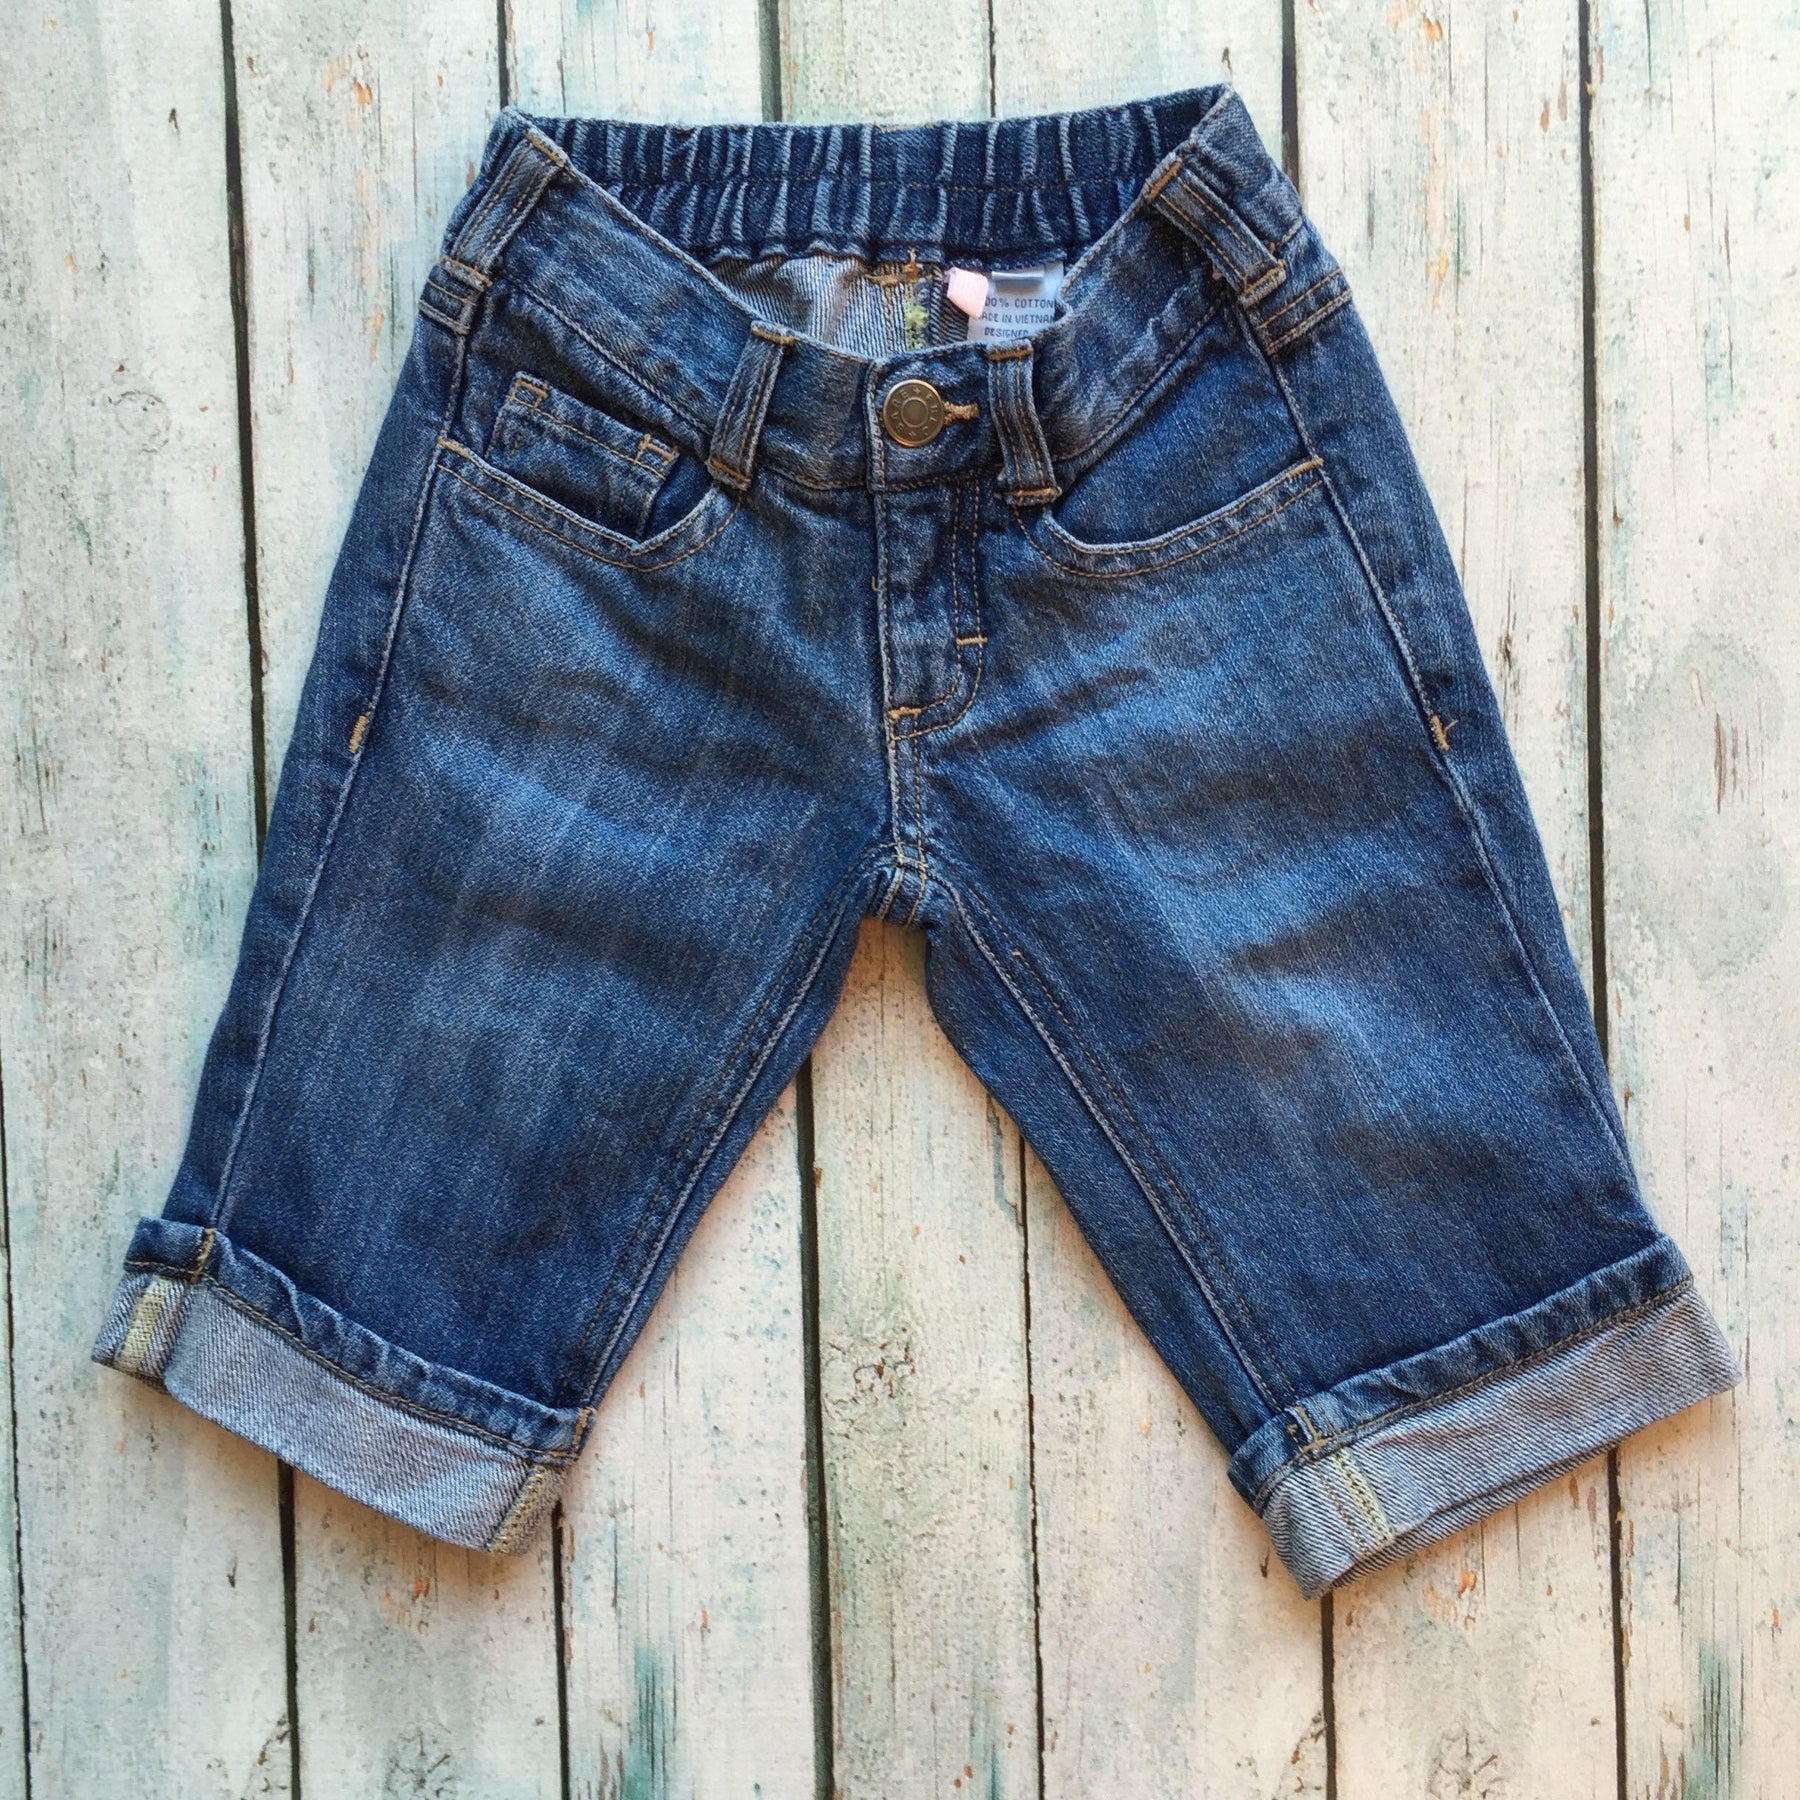 Bare Fox Premium Denim Jeans | eBay